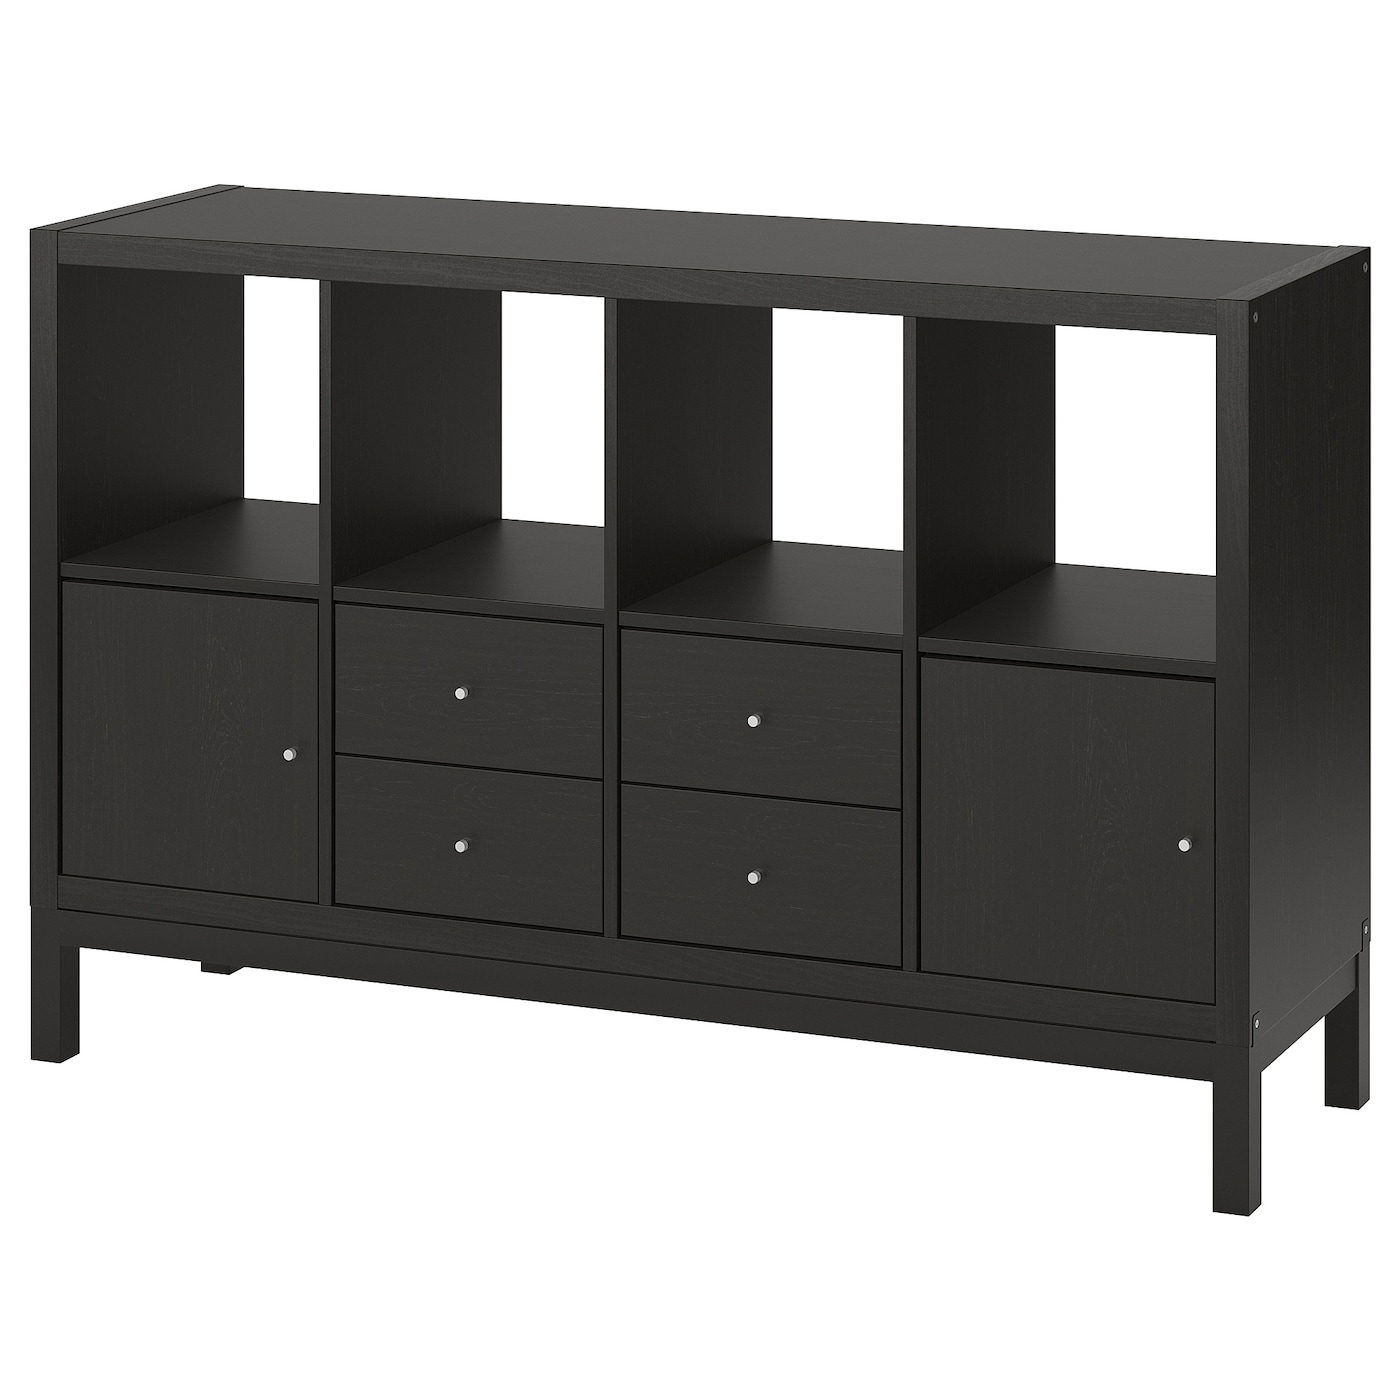 Книжный шкаф - IKEA KALLAX, 77х39х147 см, черно-коричневый, КАЛЛАКС ИКЕА